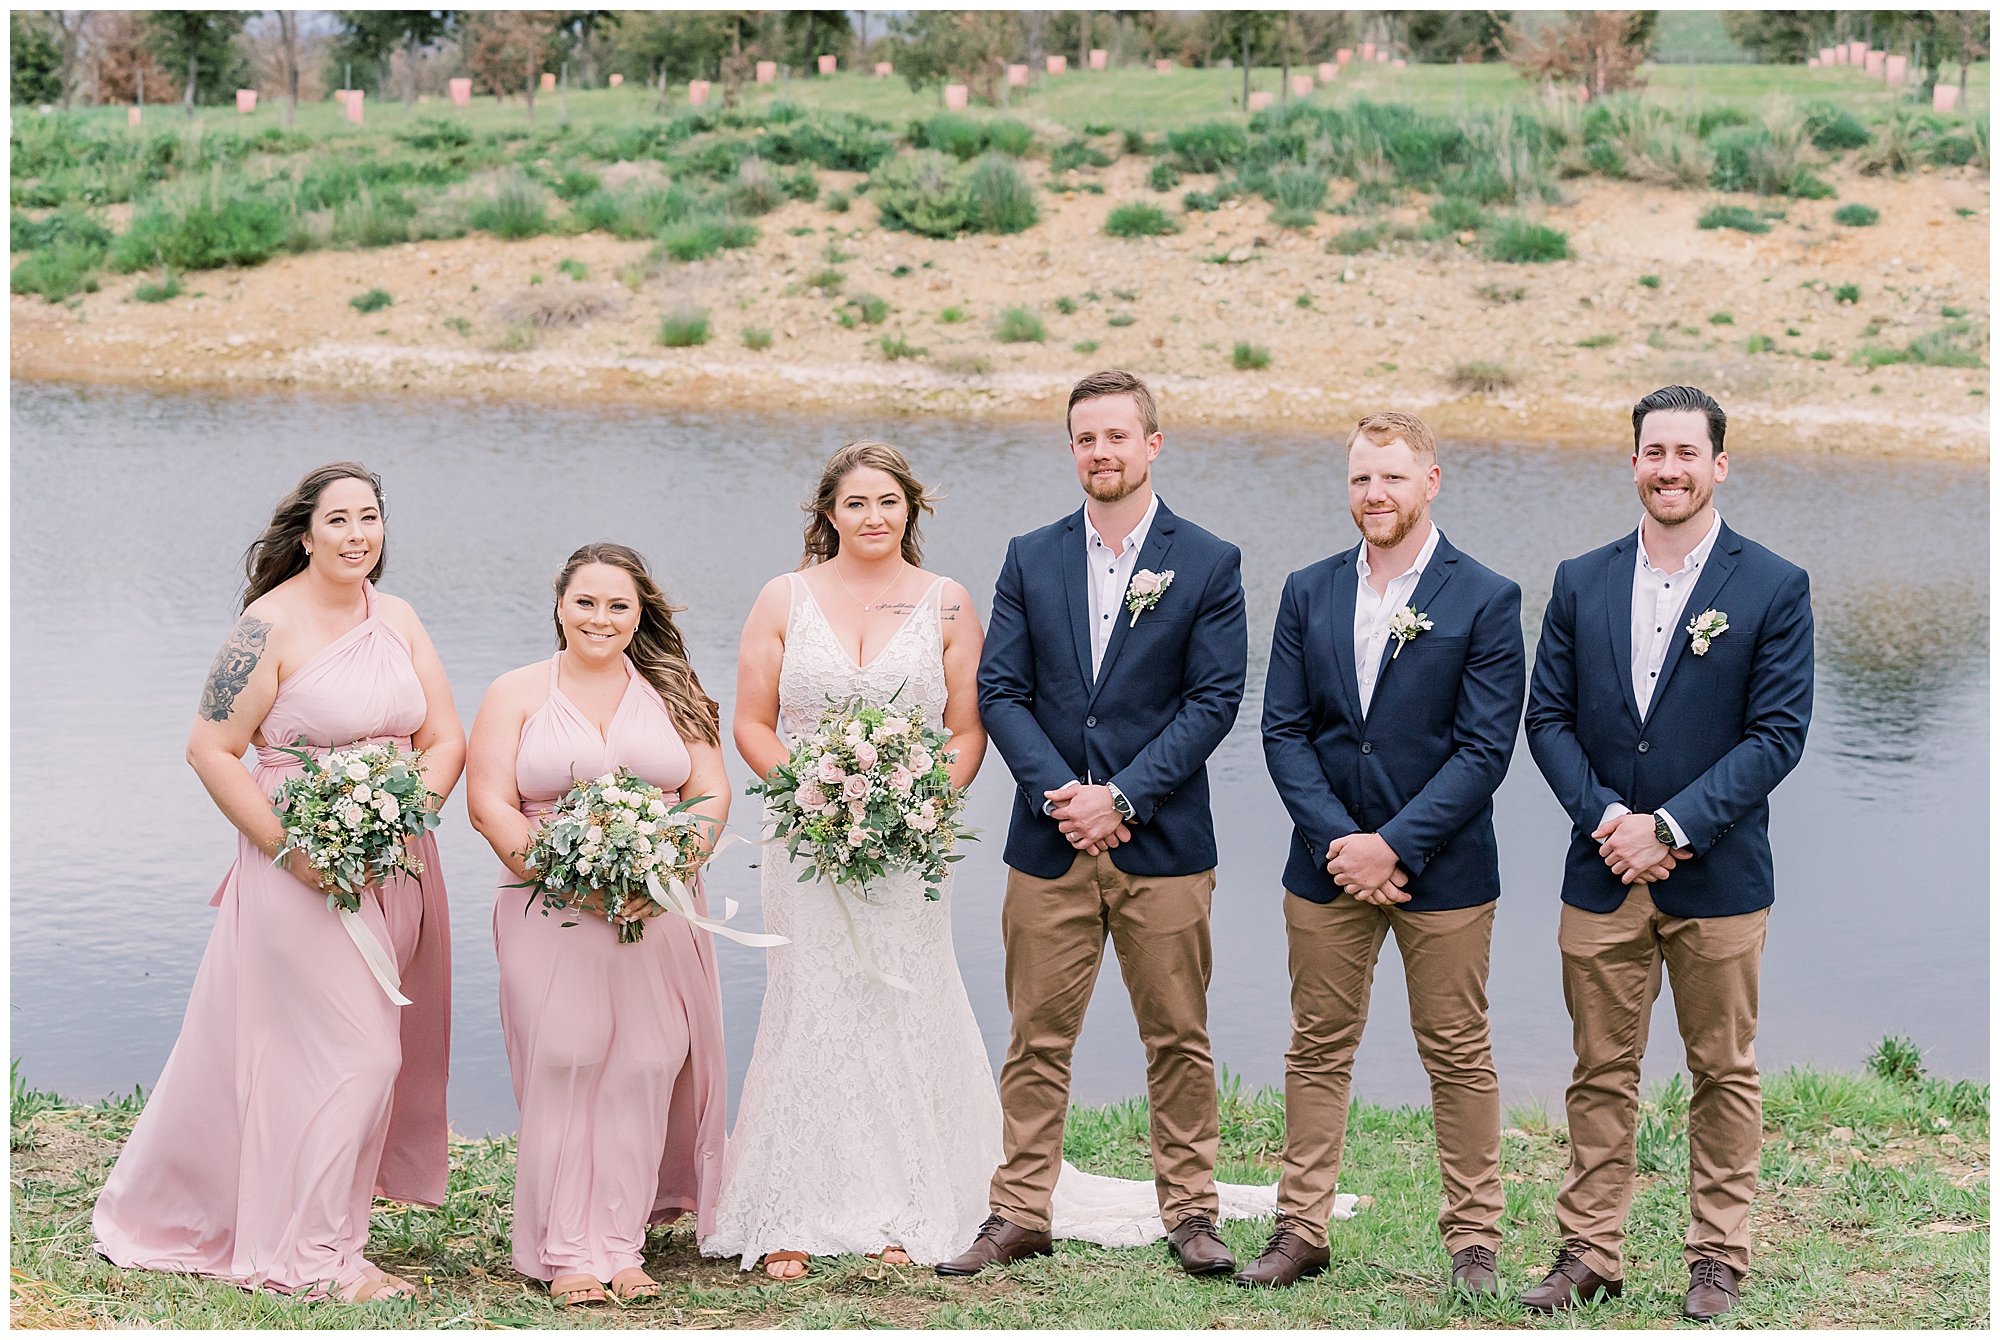 Wedding at the Truffle farm in Canberra | Wedding inspiration